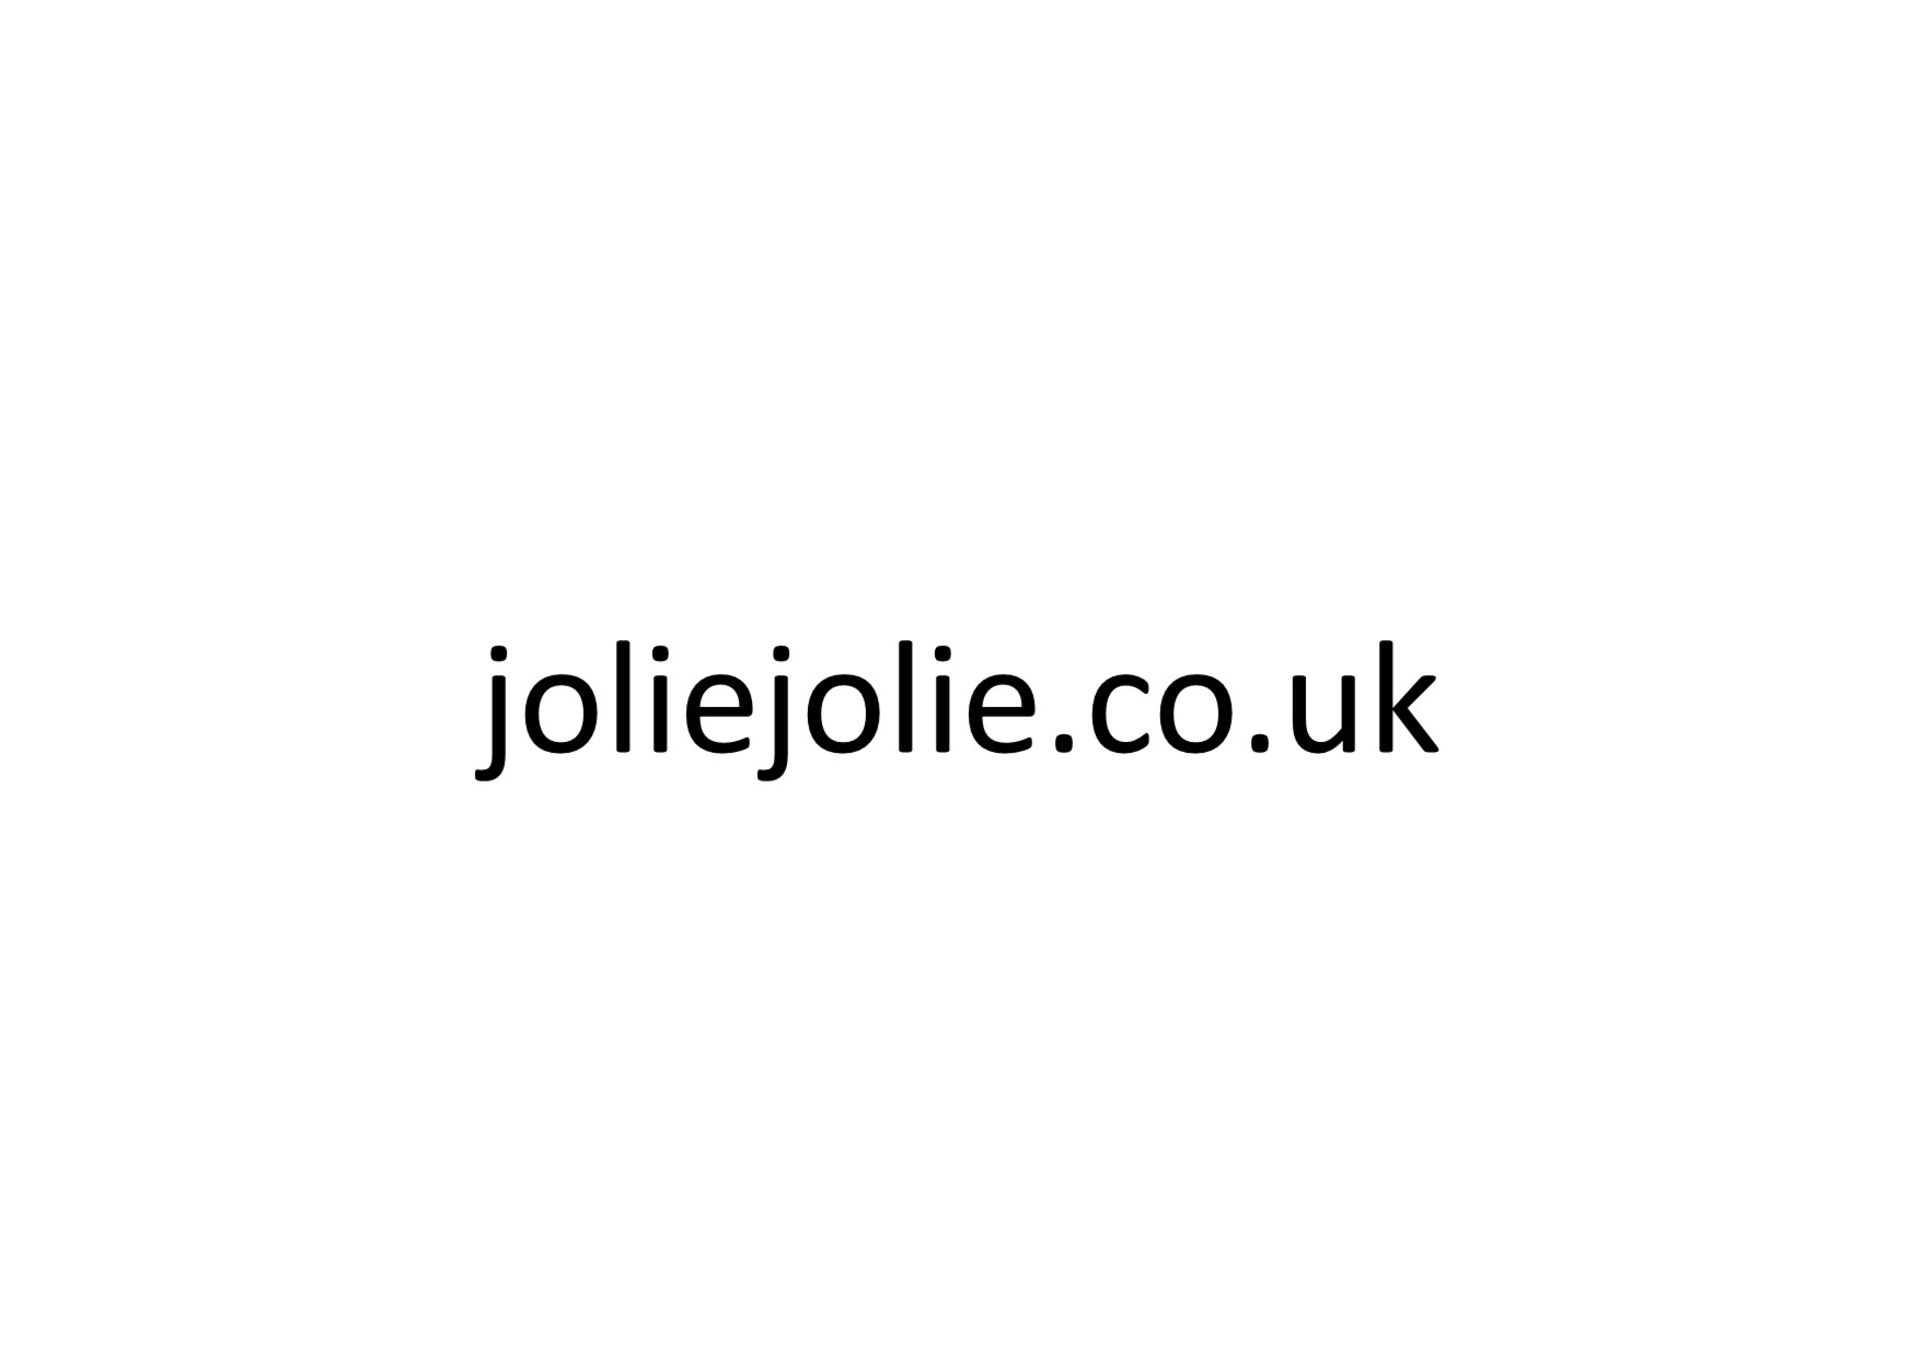 joliejolie.co.uk Domain name